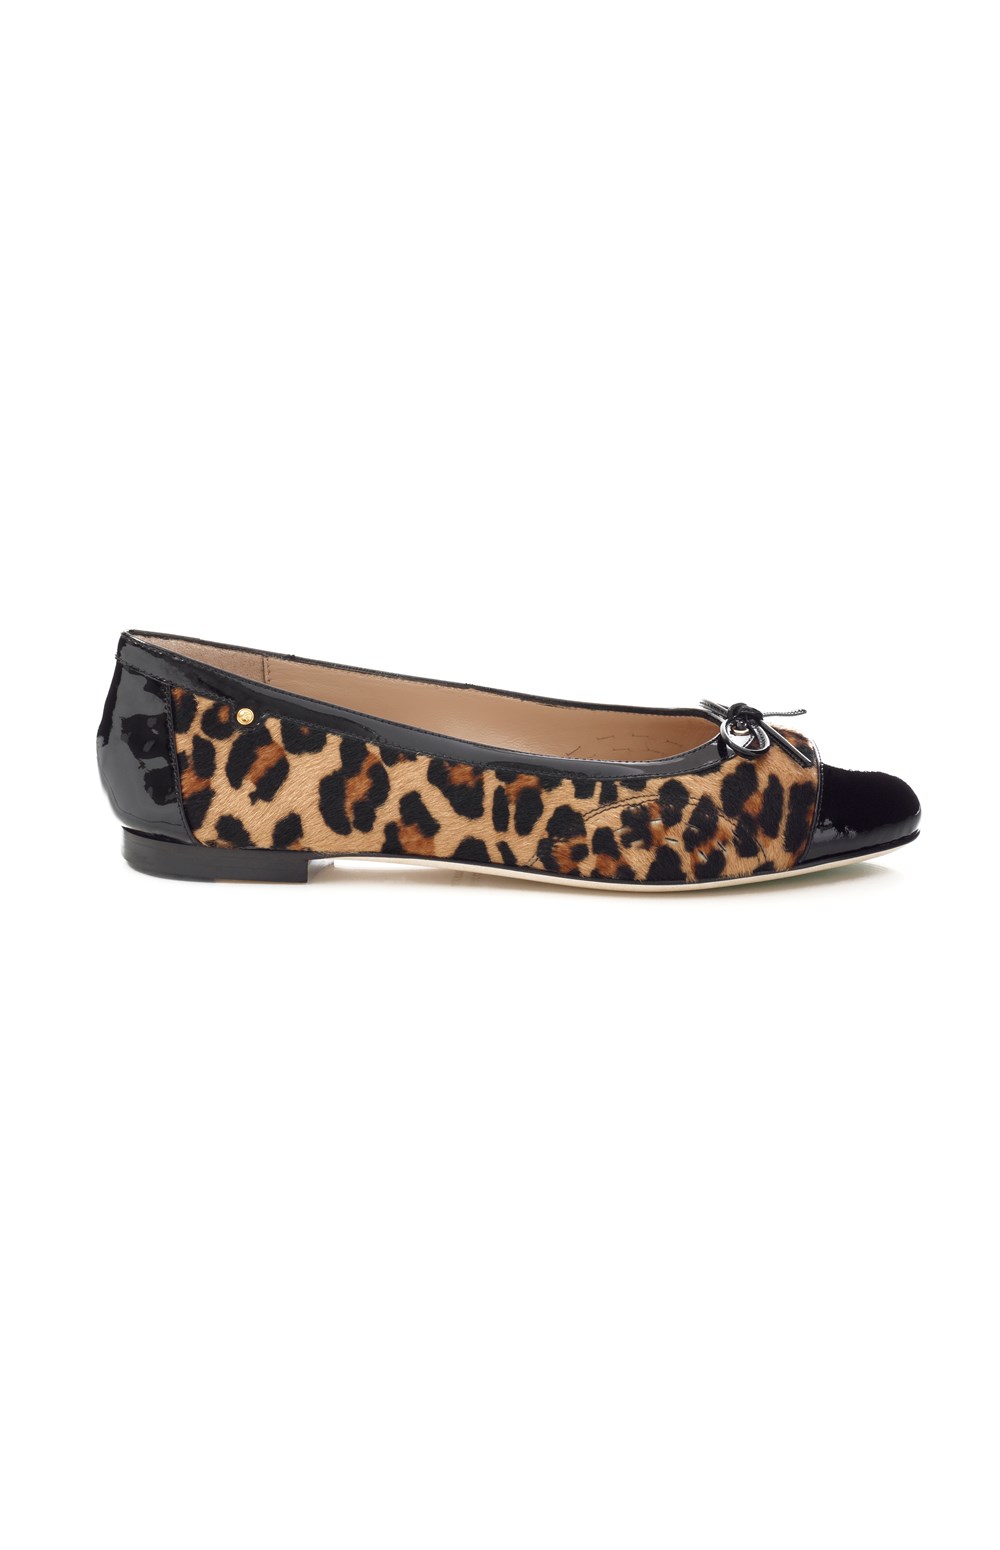 Edie - comfortable heels - heels for bunions | Julie Lopez Shoes